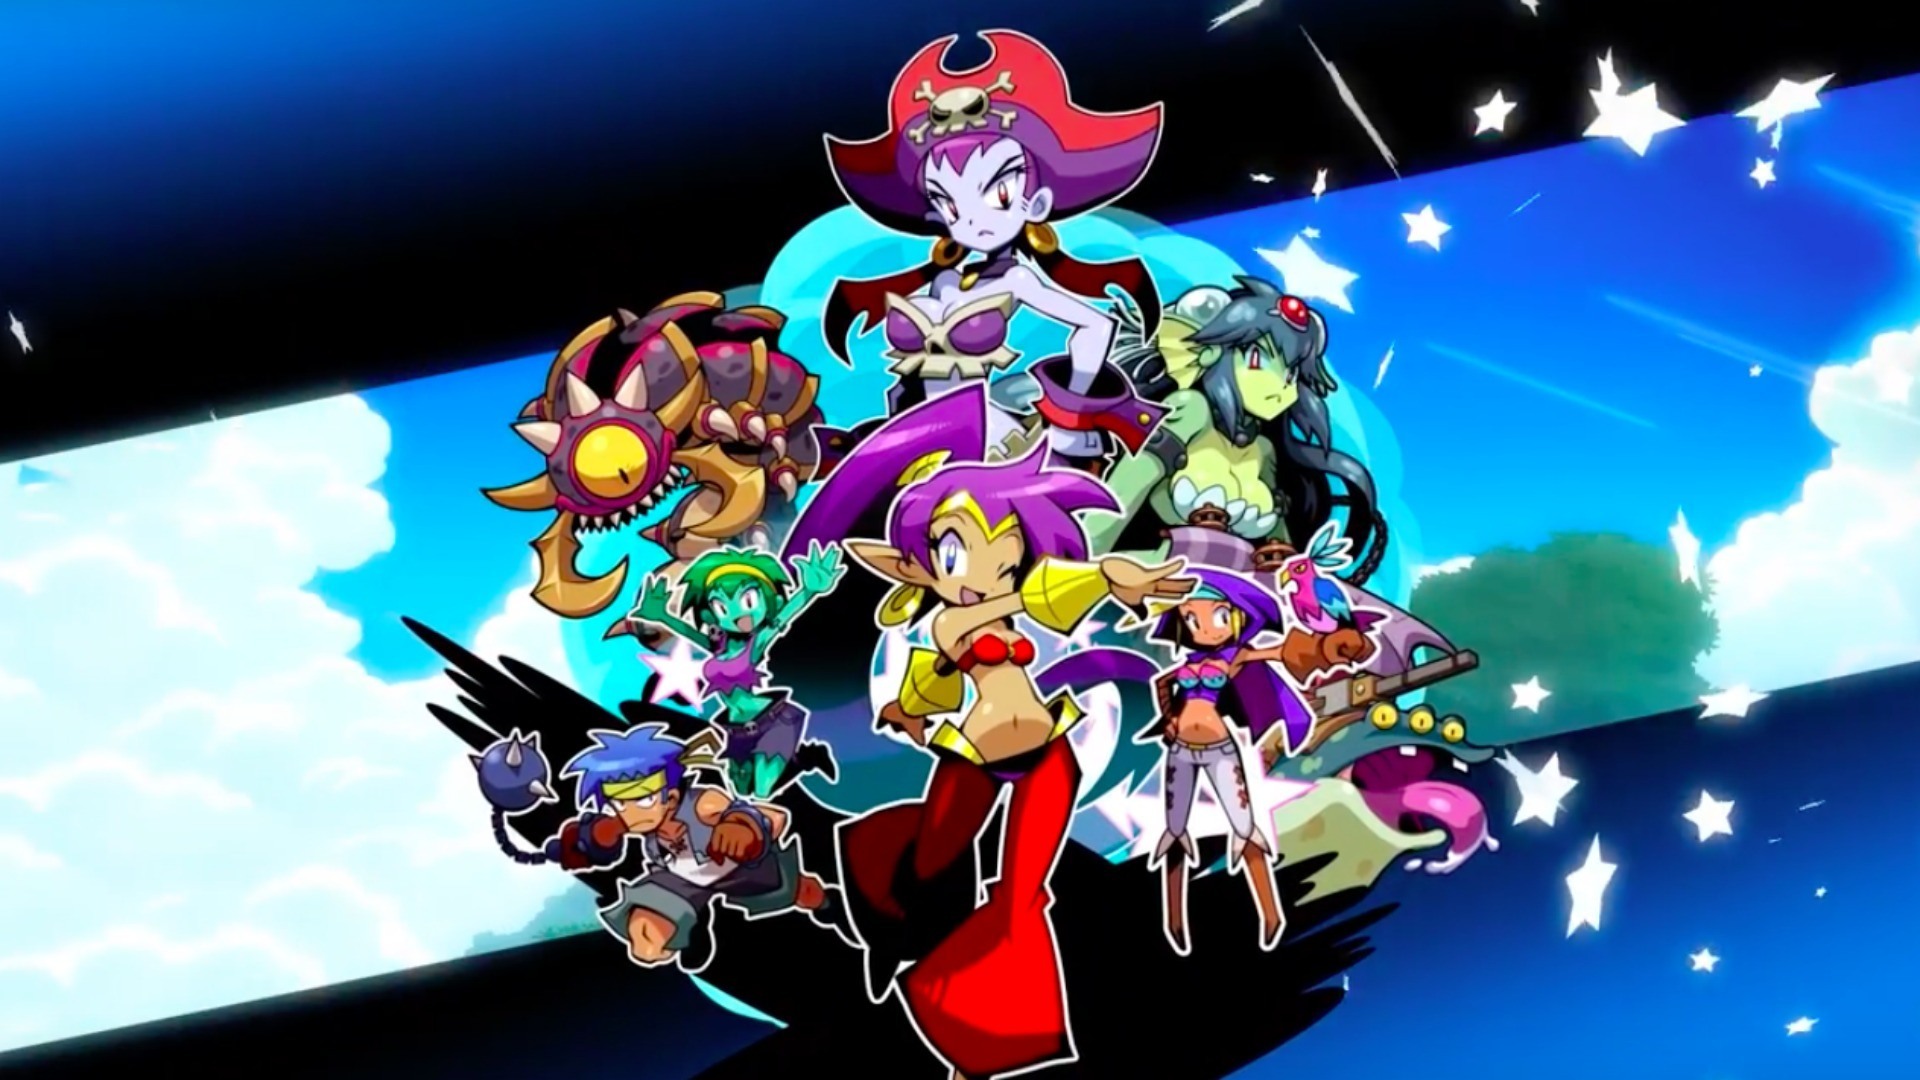 High Resolution Wallpaper | Shantae: Half-Genie Hero 1920x1080 px